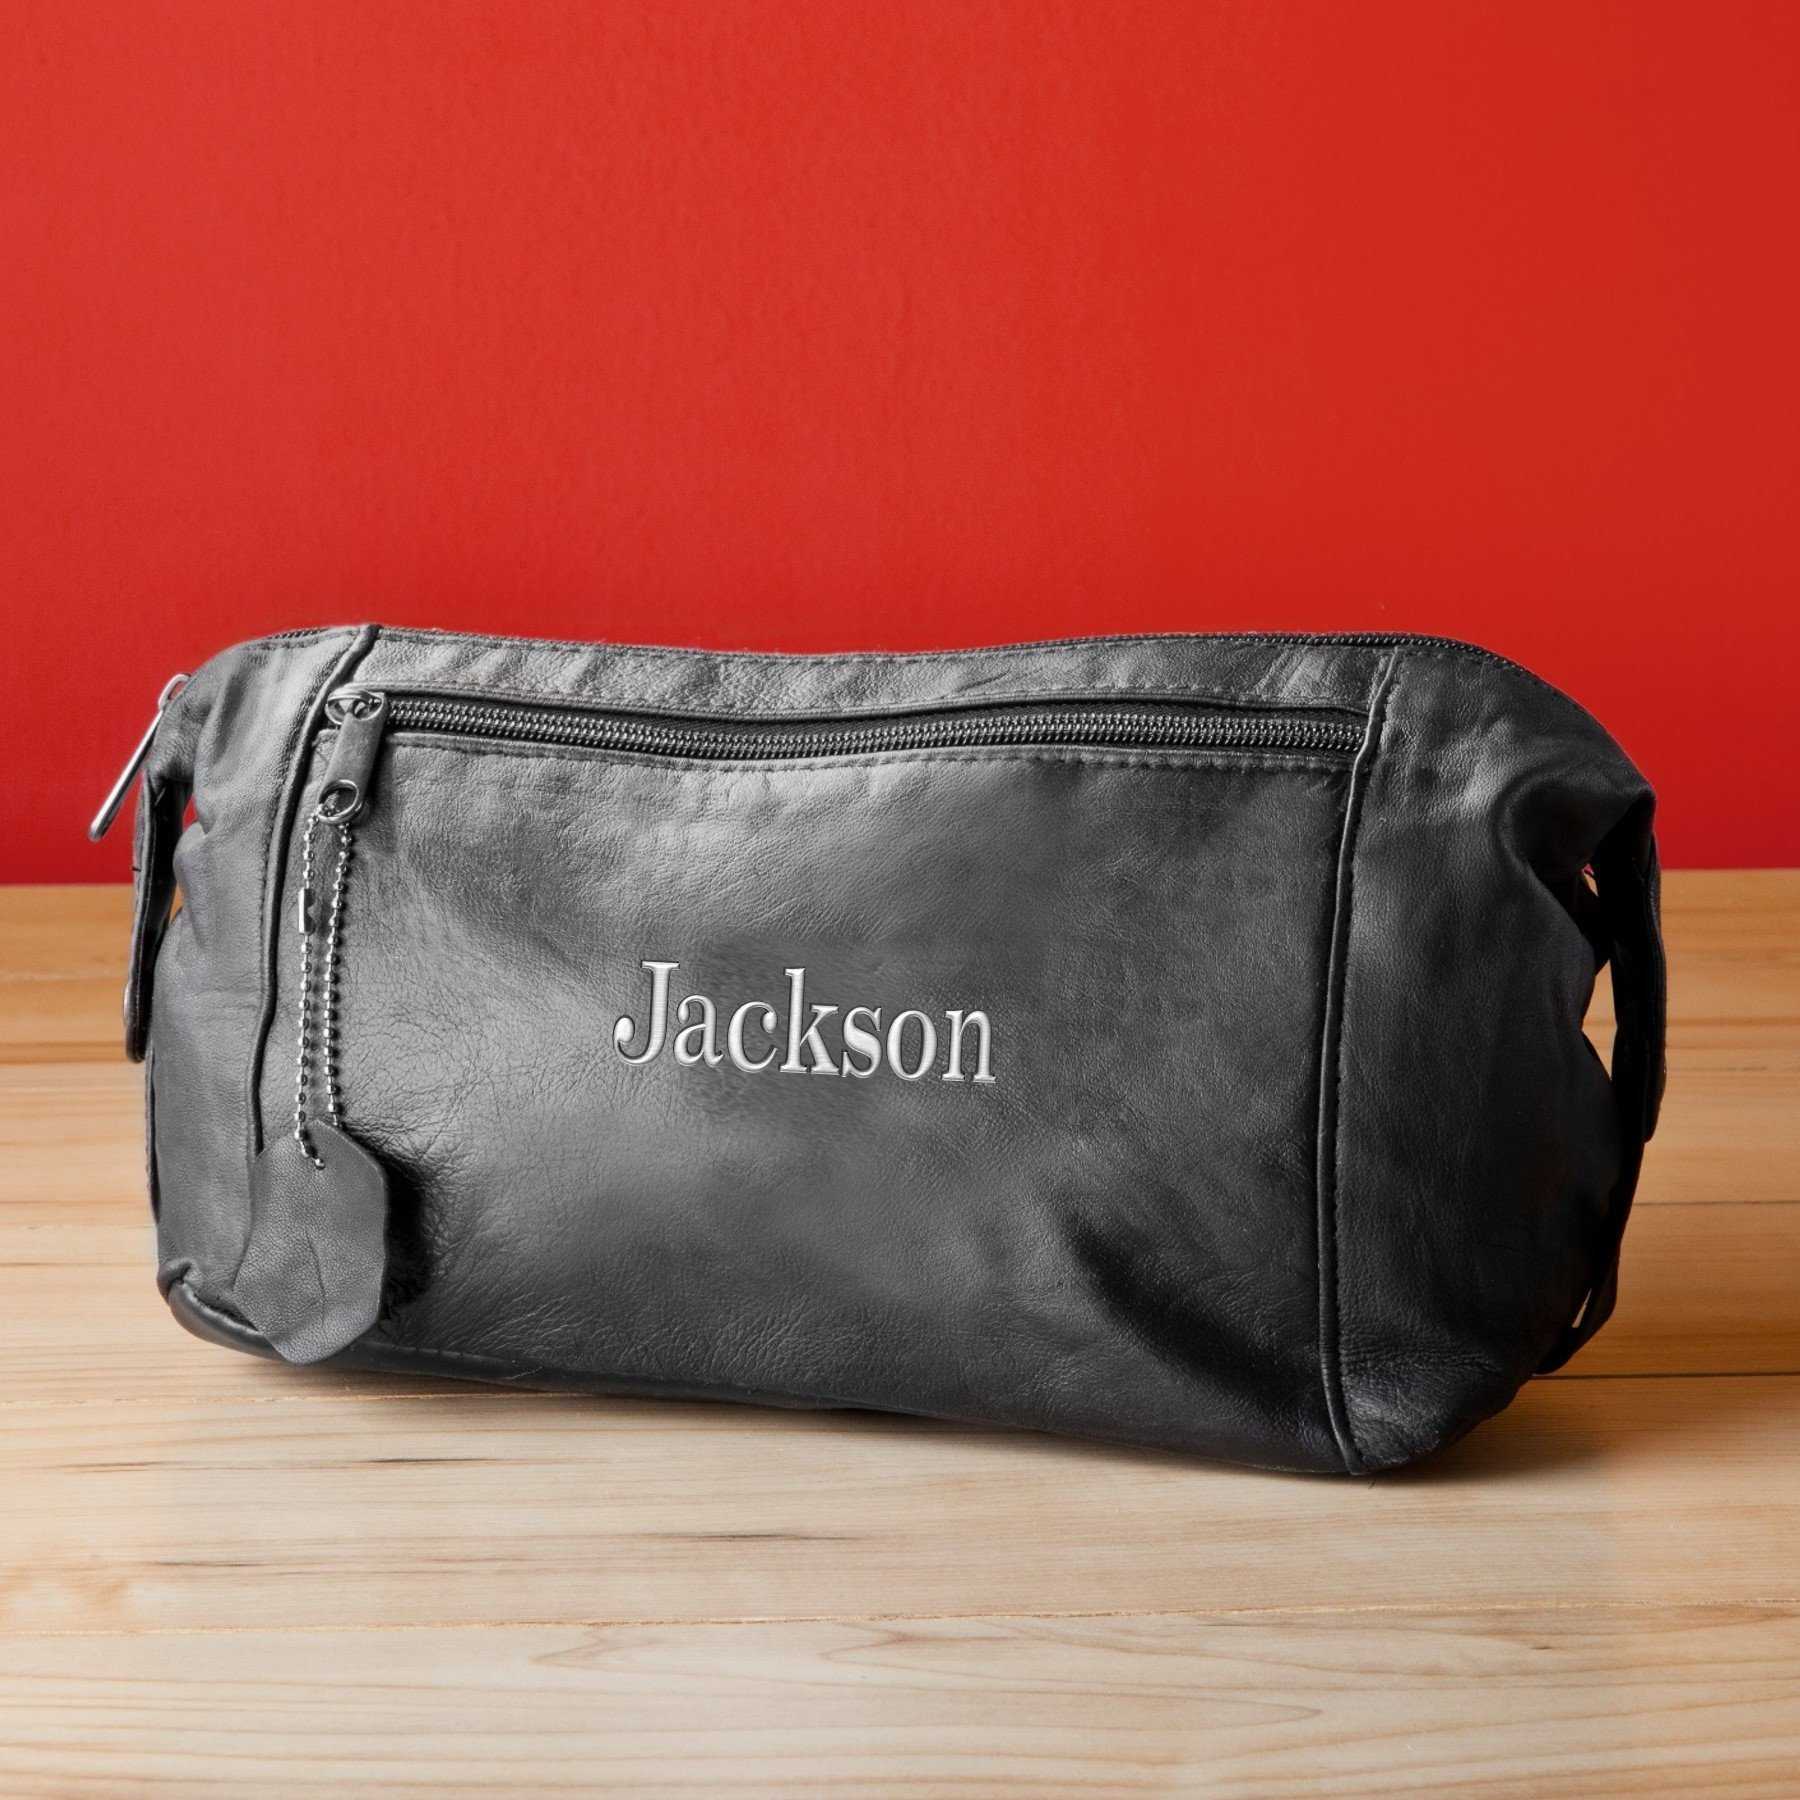 Personalized Travel Bag - Shaving Kit - Leather